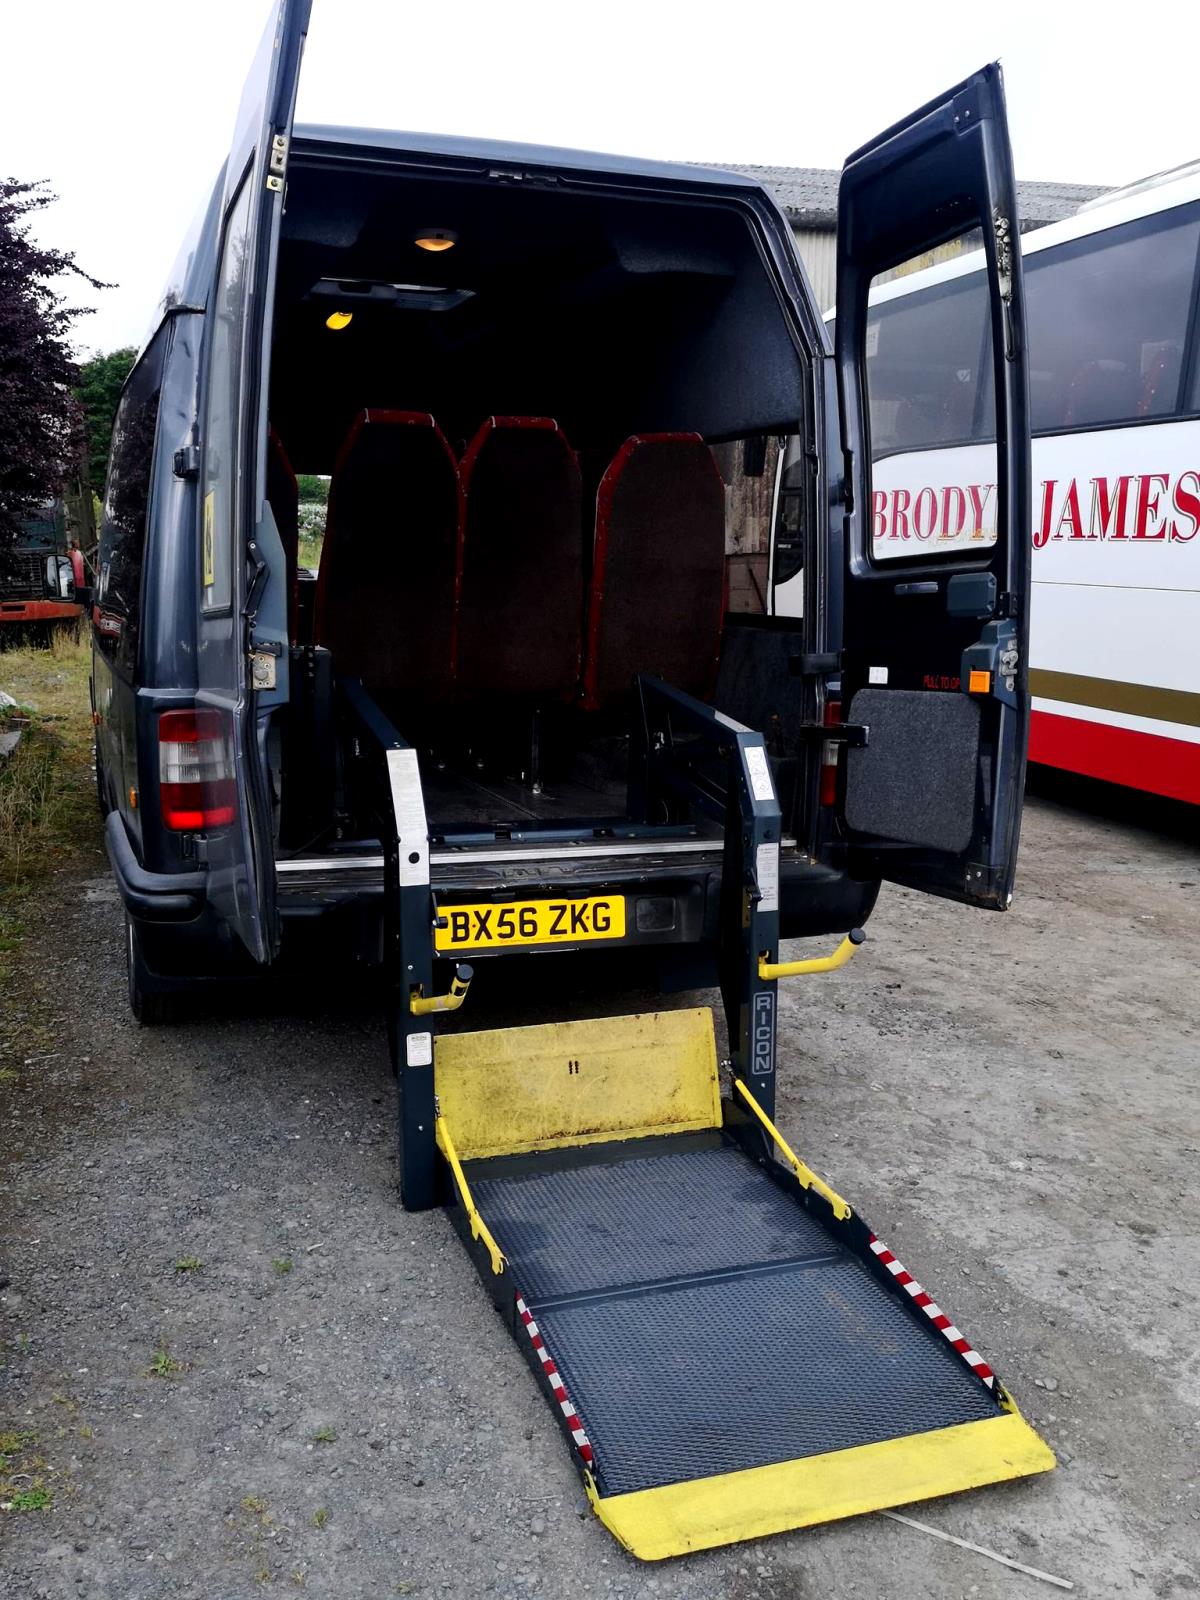 Minibus HireBrodyr James Coaches For Hire Services